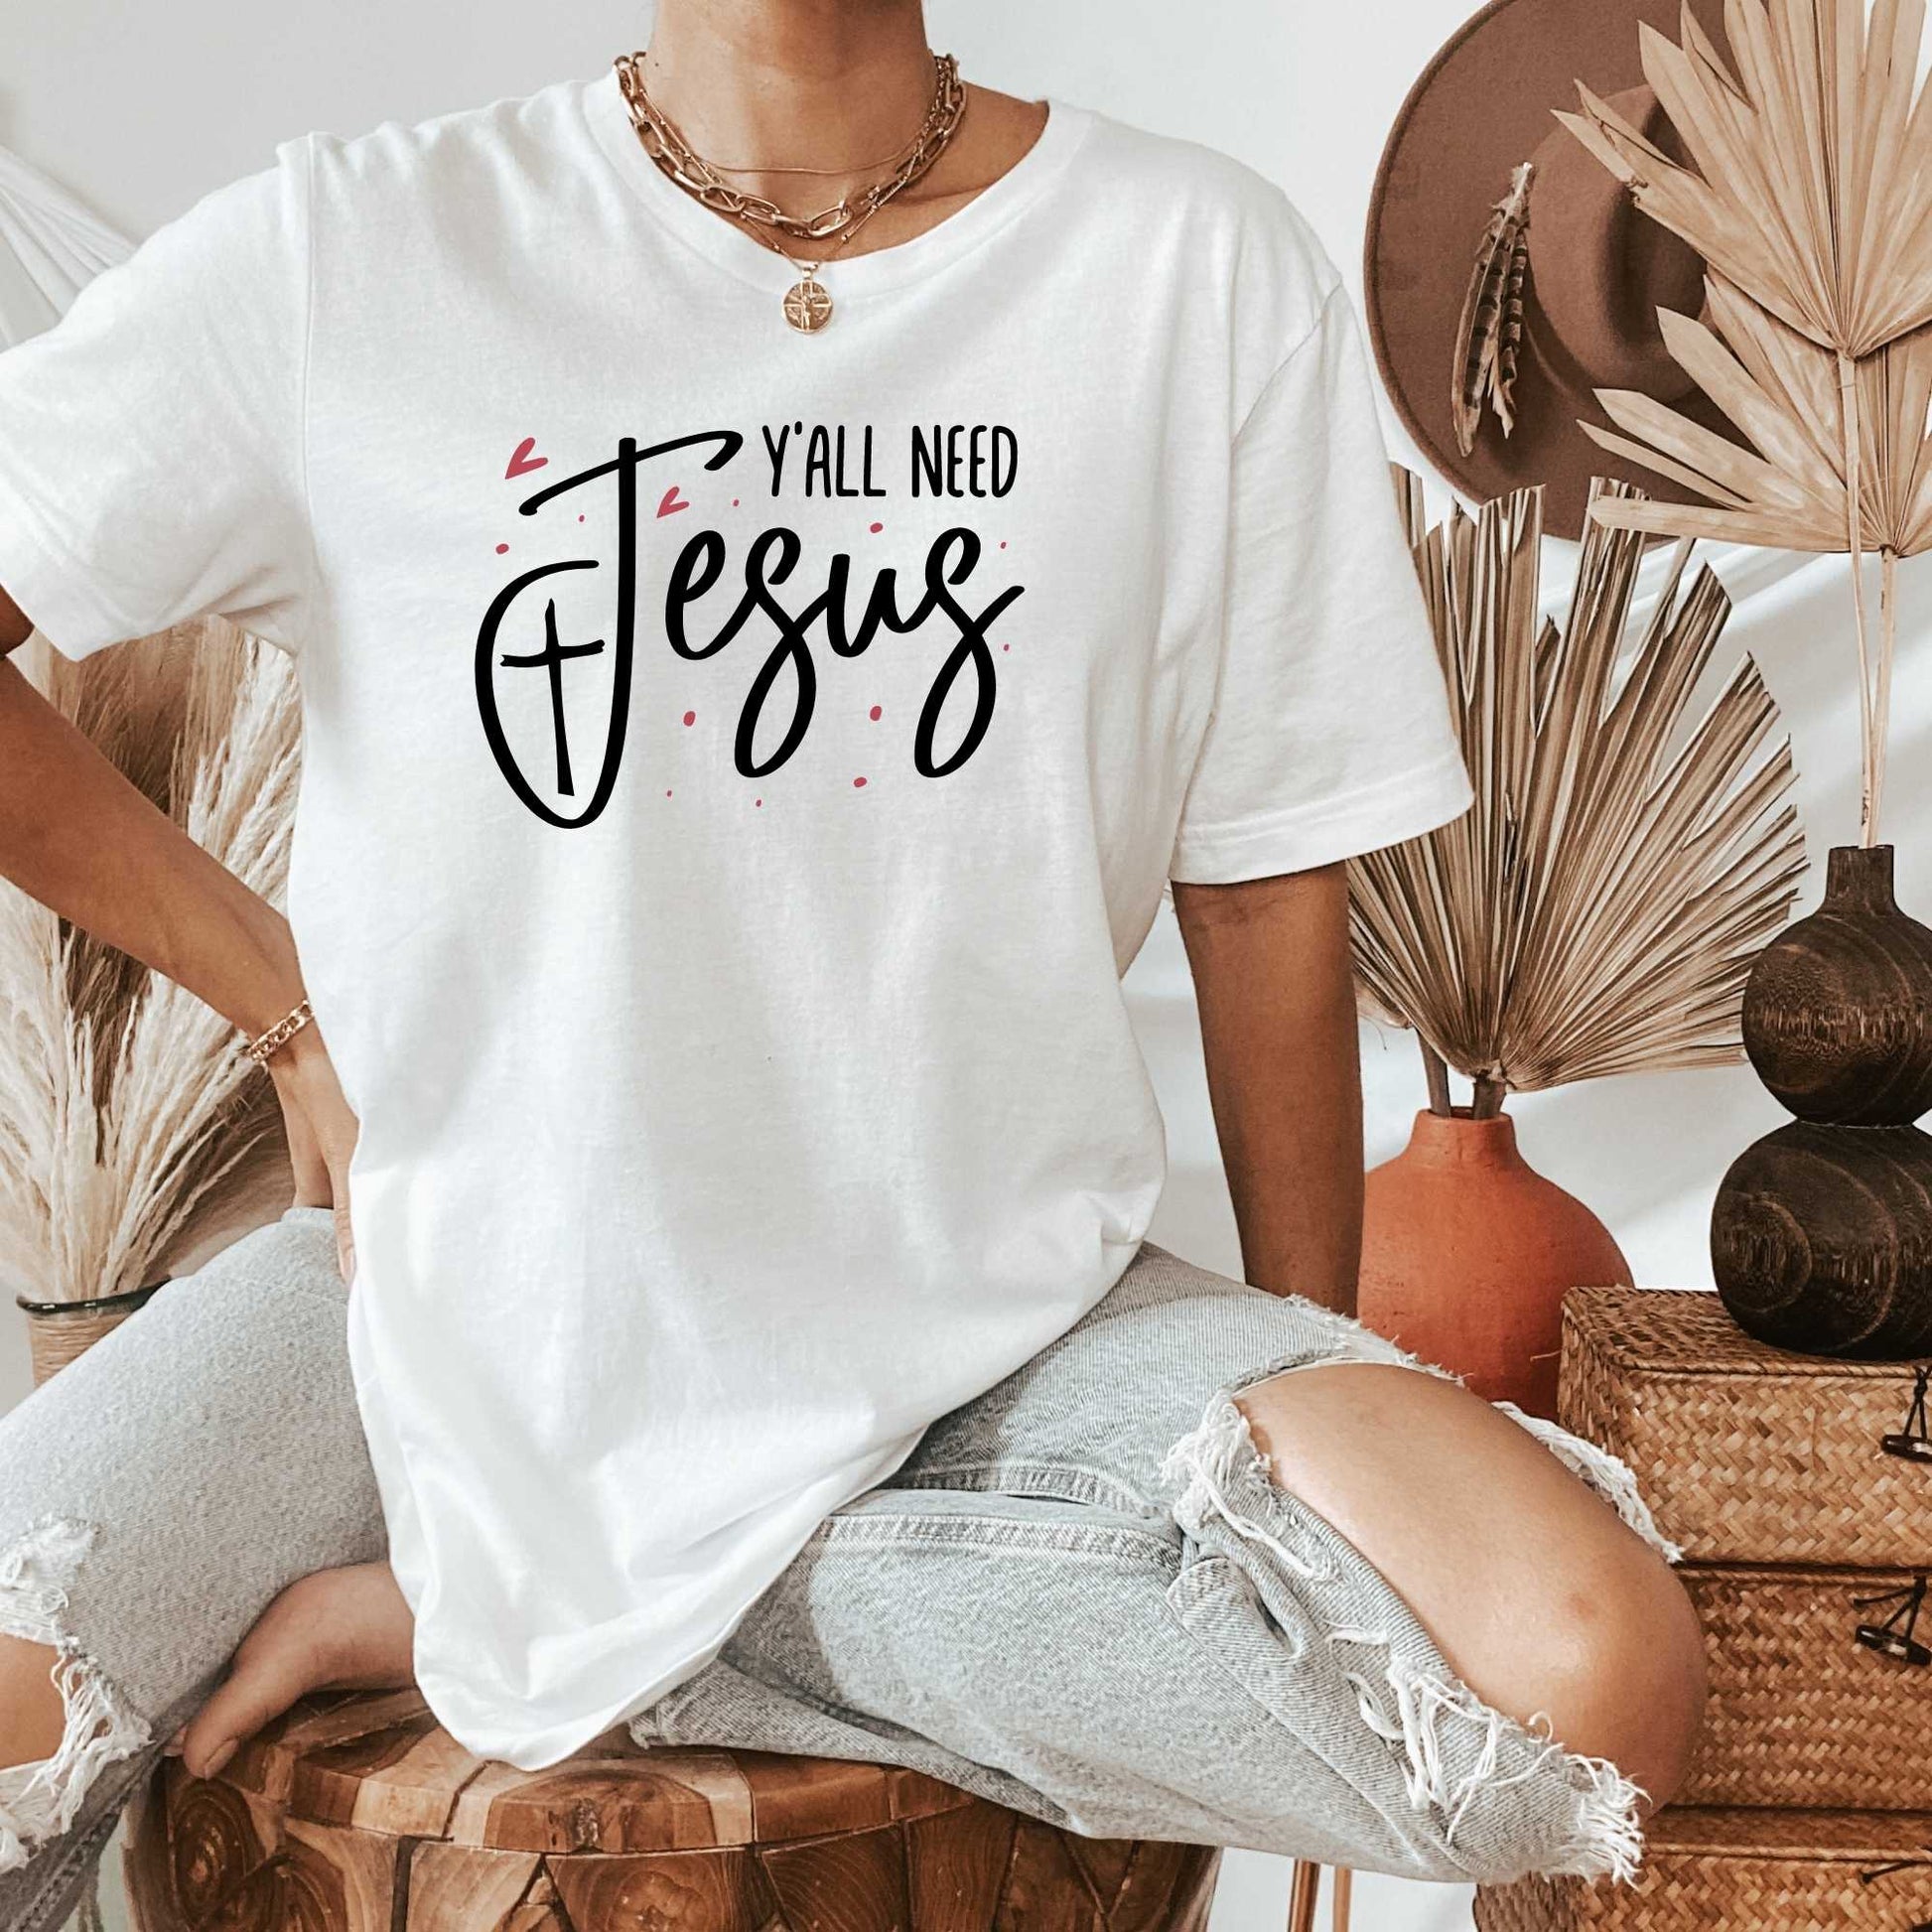 Yall Need Jesus, Funny Christian Shirts about Jesus HMDesignStudioUS